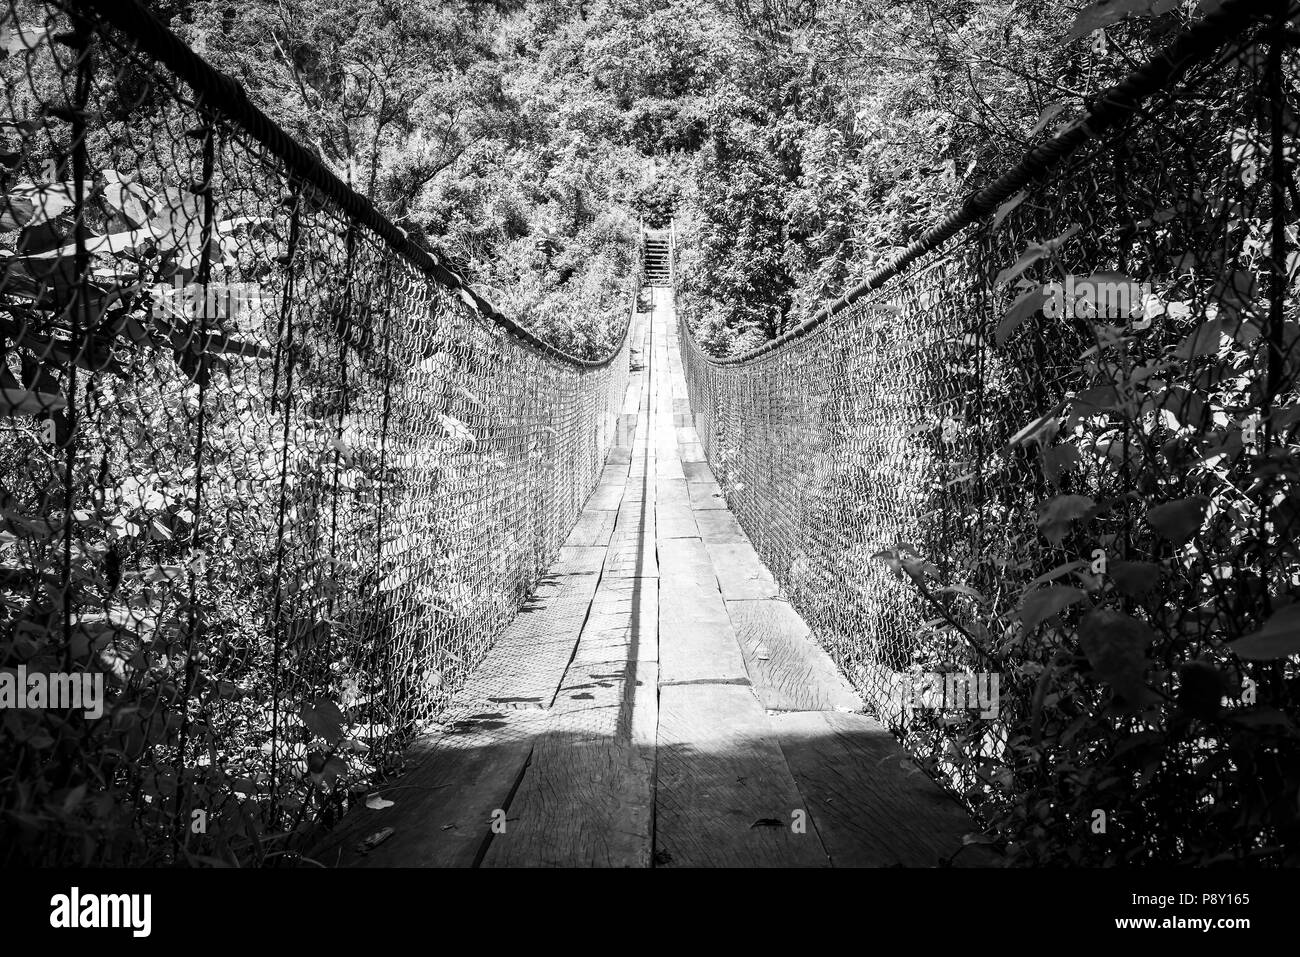 Wooden suspension bridge over river in Panajachel, Guatemala, Central America in black and white Stock Photo